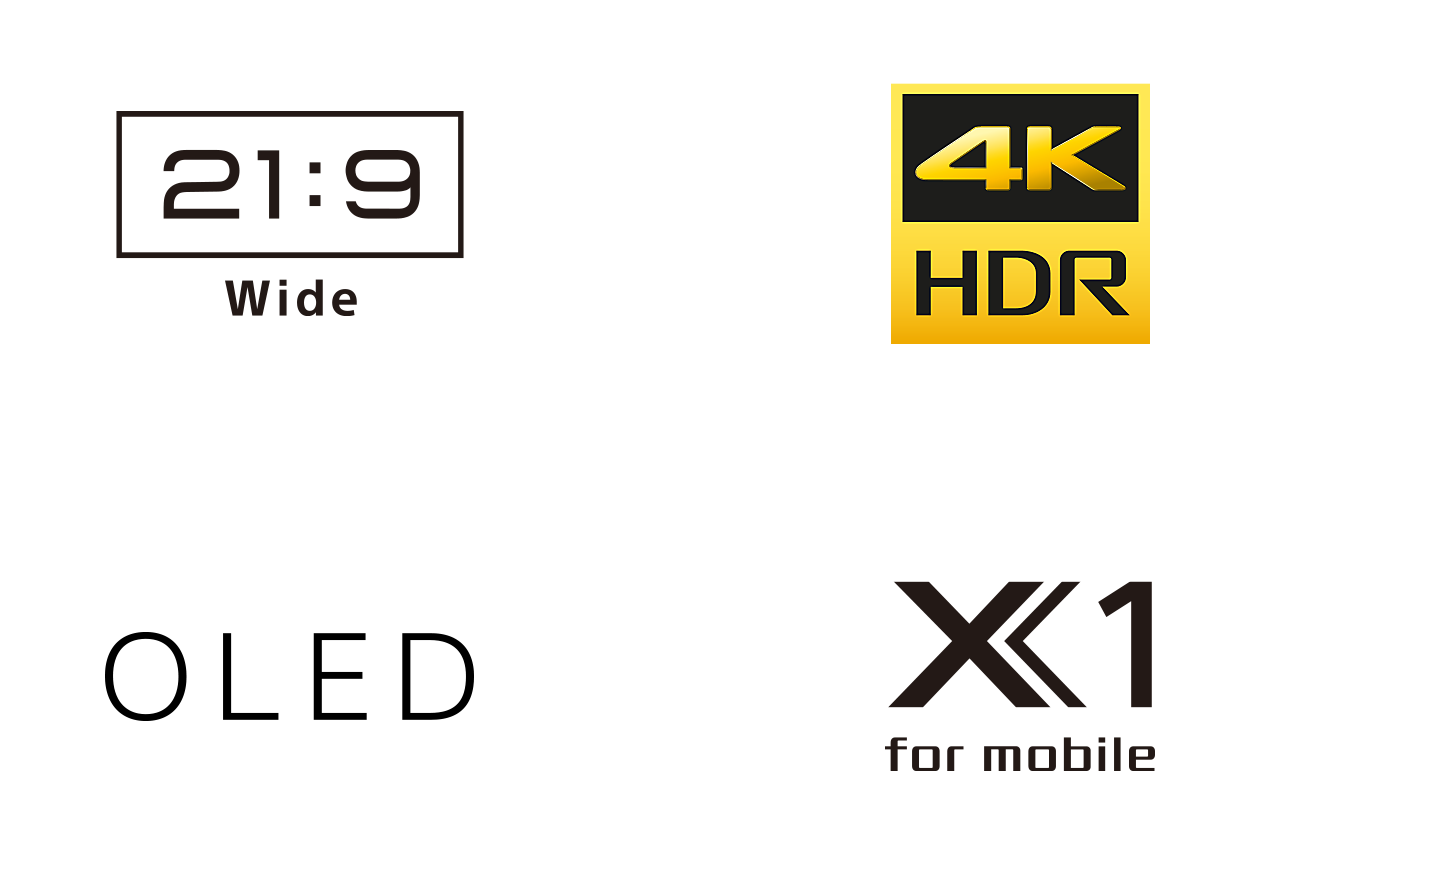 Logos von 21:9 Wide, 4K HDR, OLED und X1 for mobile